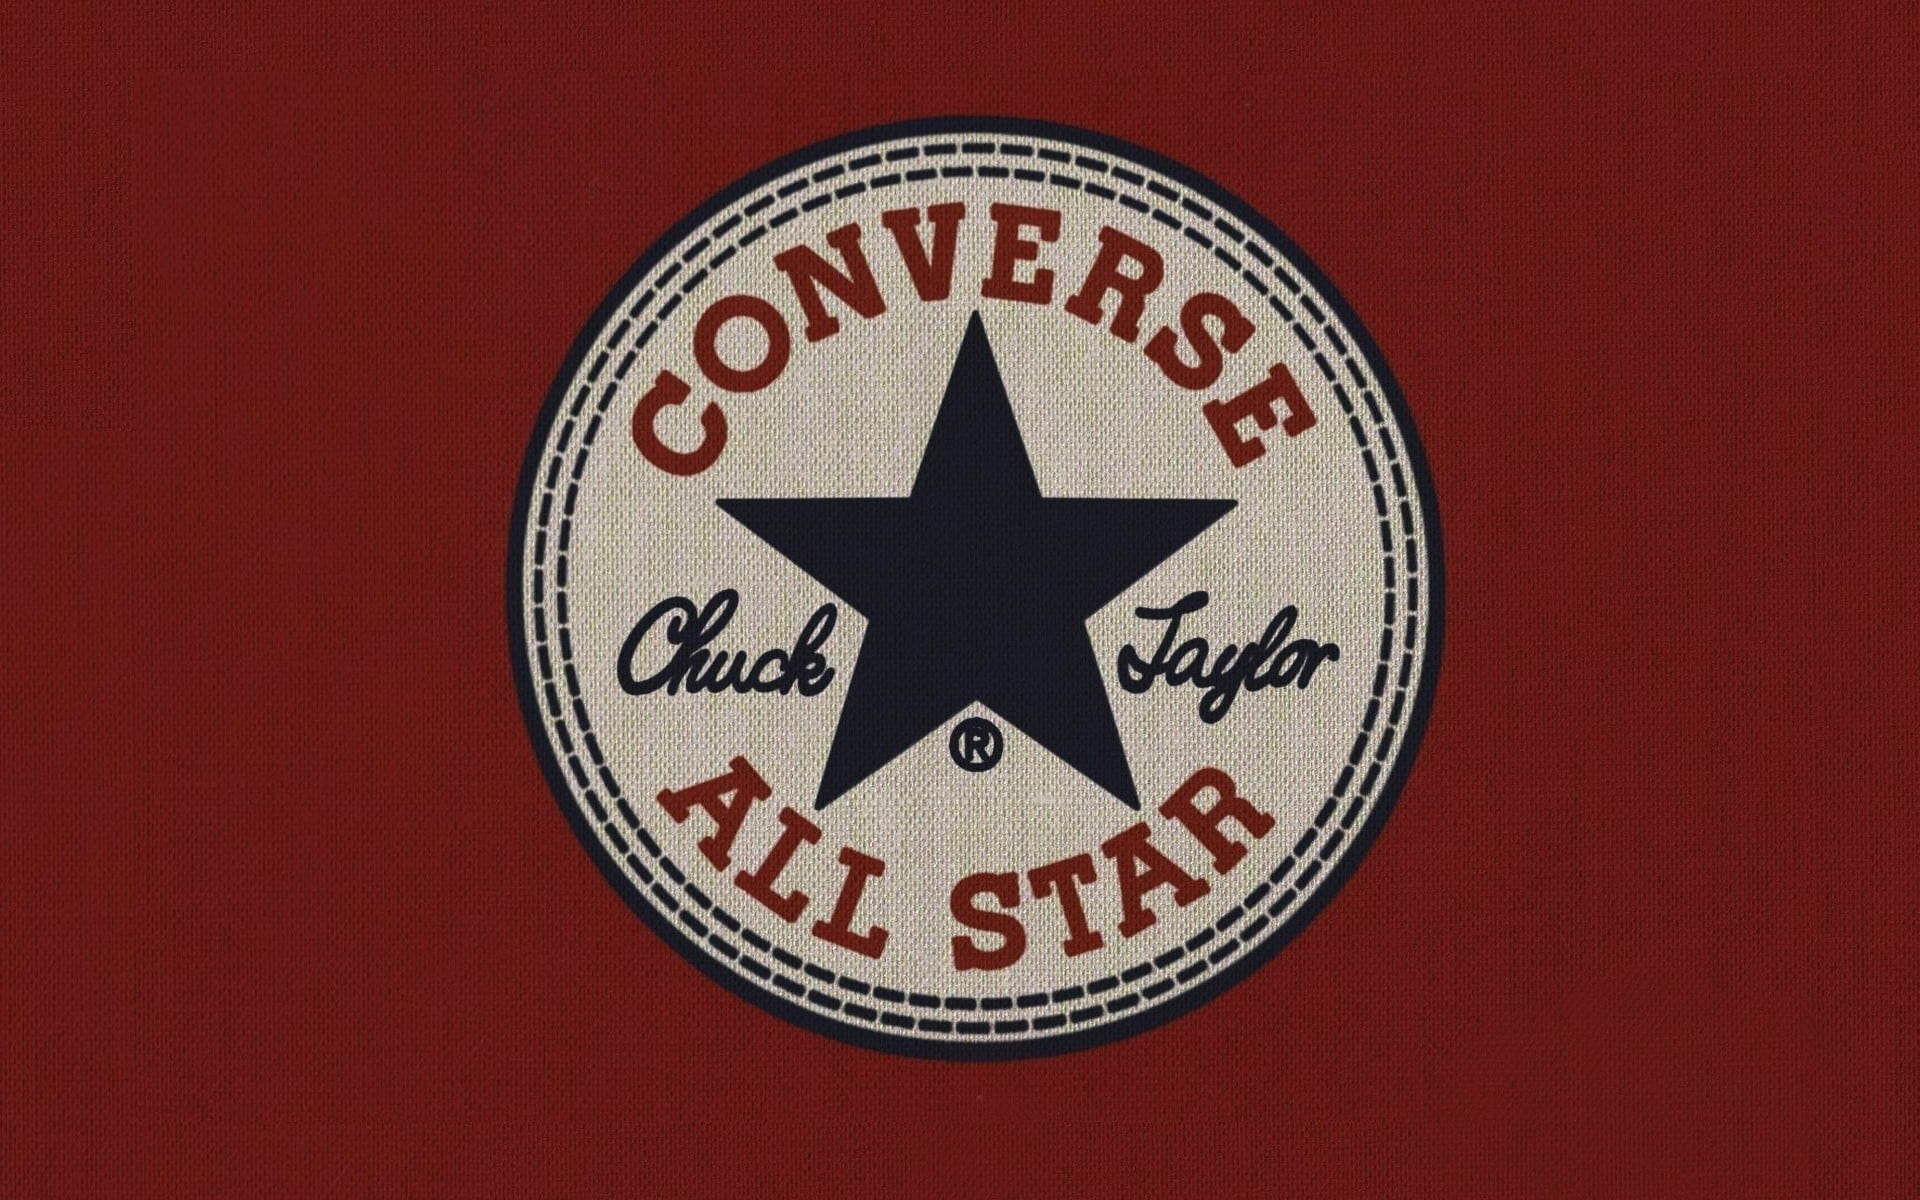 Converse All Star logo wallpaper, red background, artwork, communication